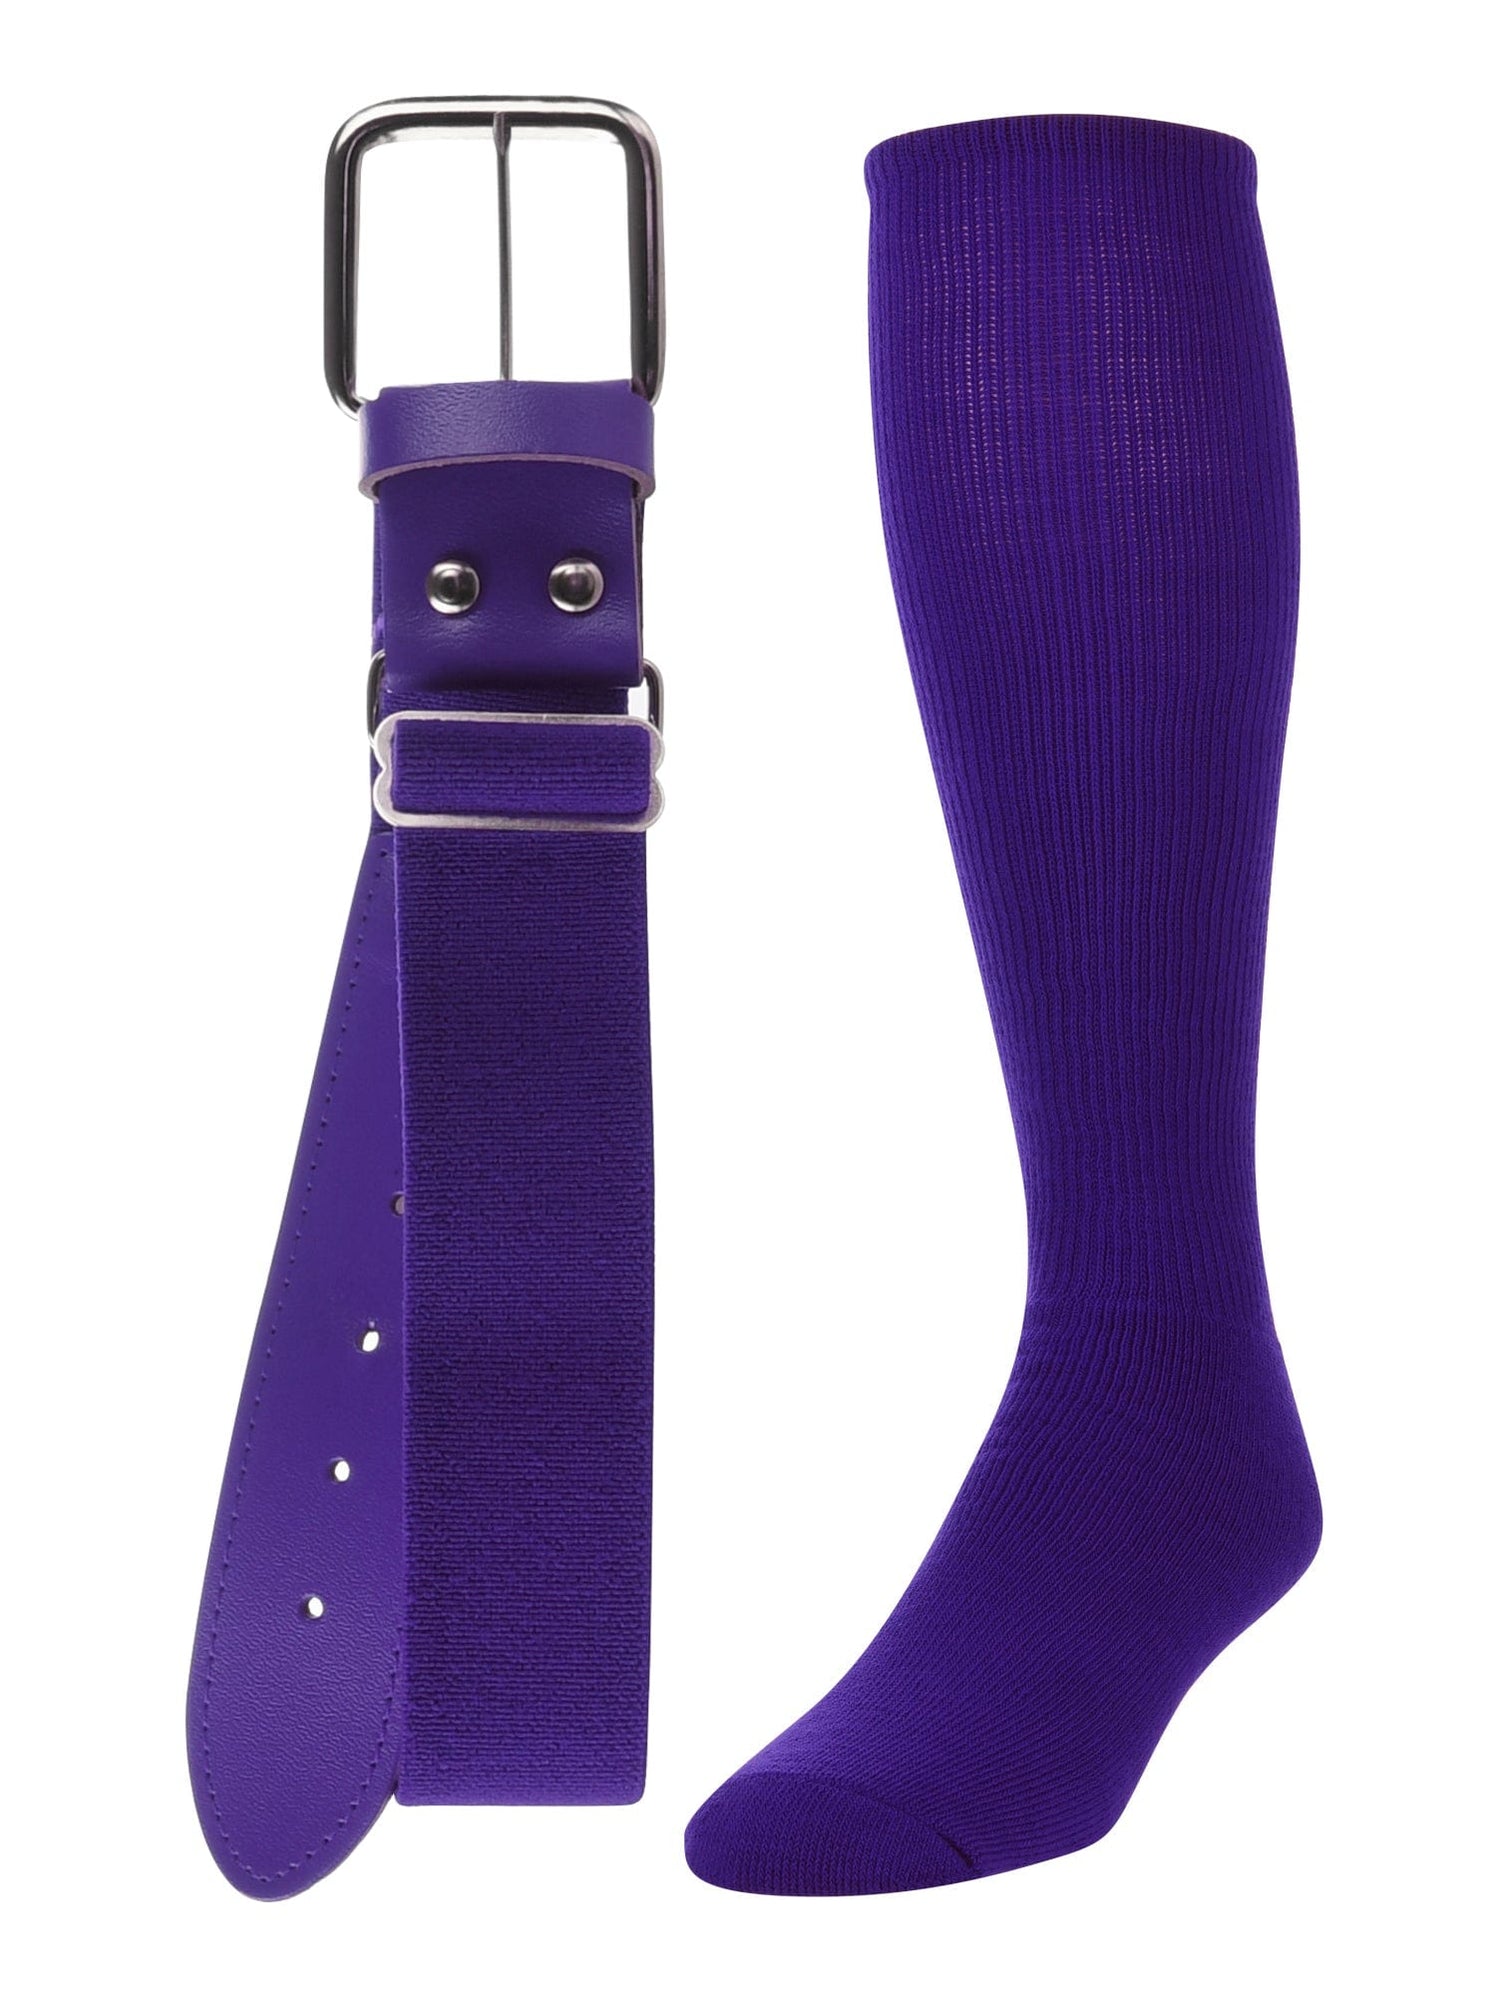 Tck Socks Purple Small Softball And Baseball Belts Socks Combo For Youth Or Adults 39517320741079 1496x1995 ?v=1695050251